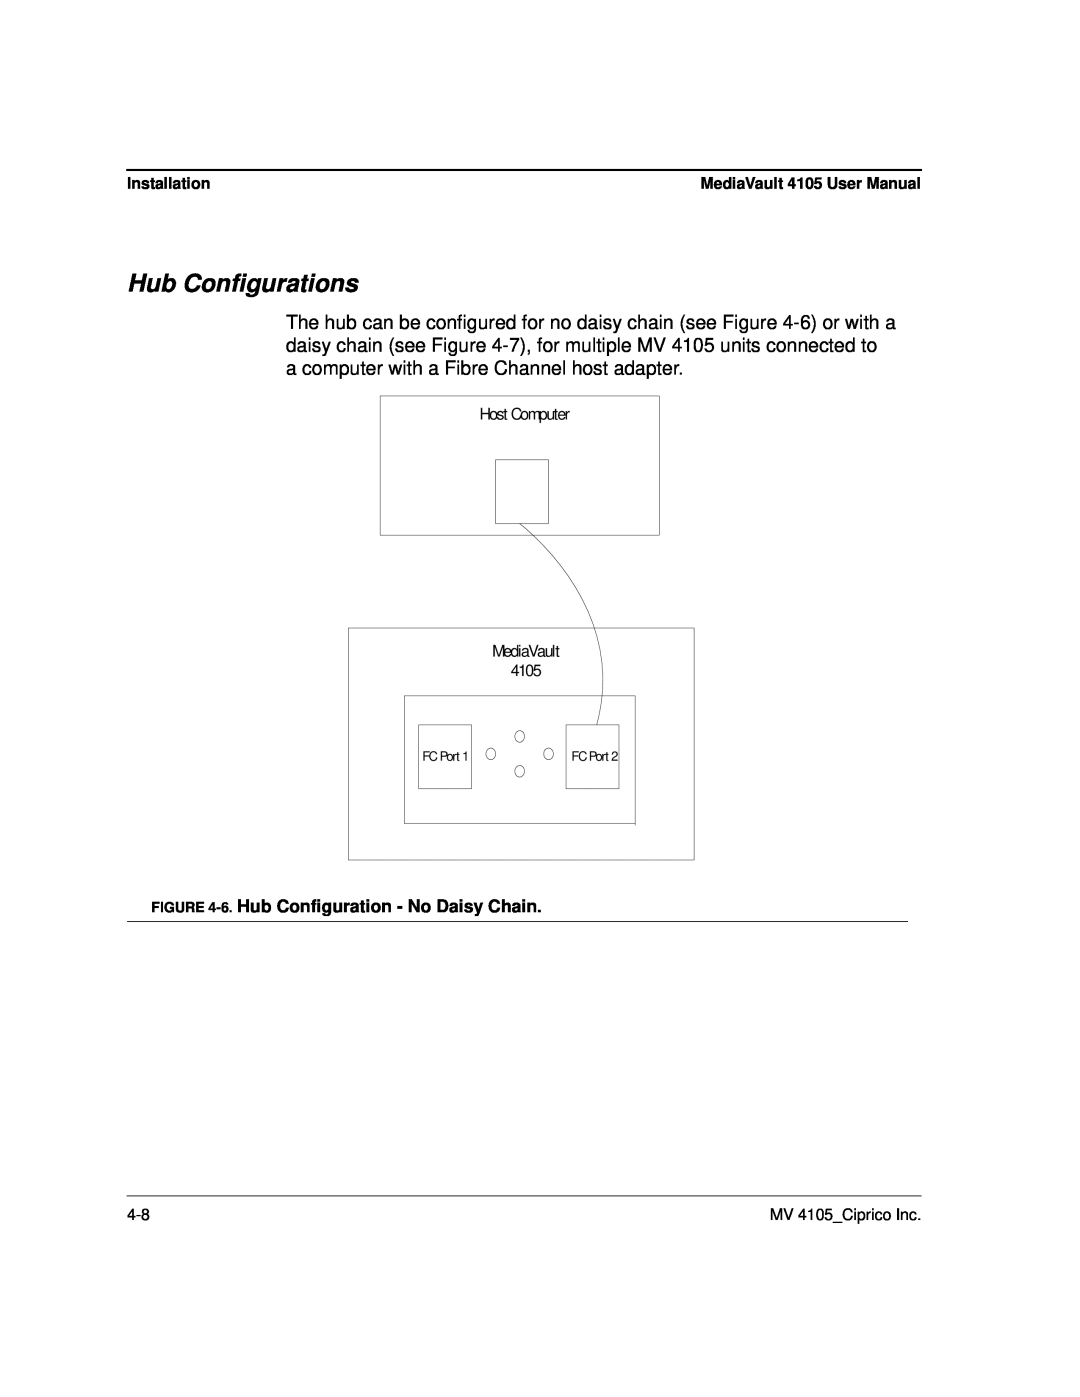 Ciprico 4105 Series user manual Hub Configurations, 6. Hub Configuration - No Daisy Chain, FC Port 